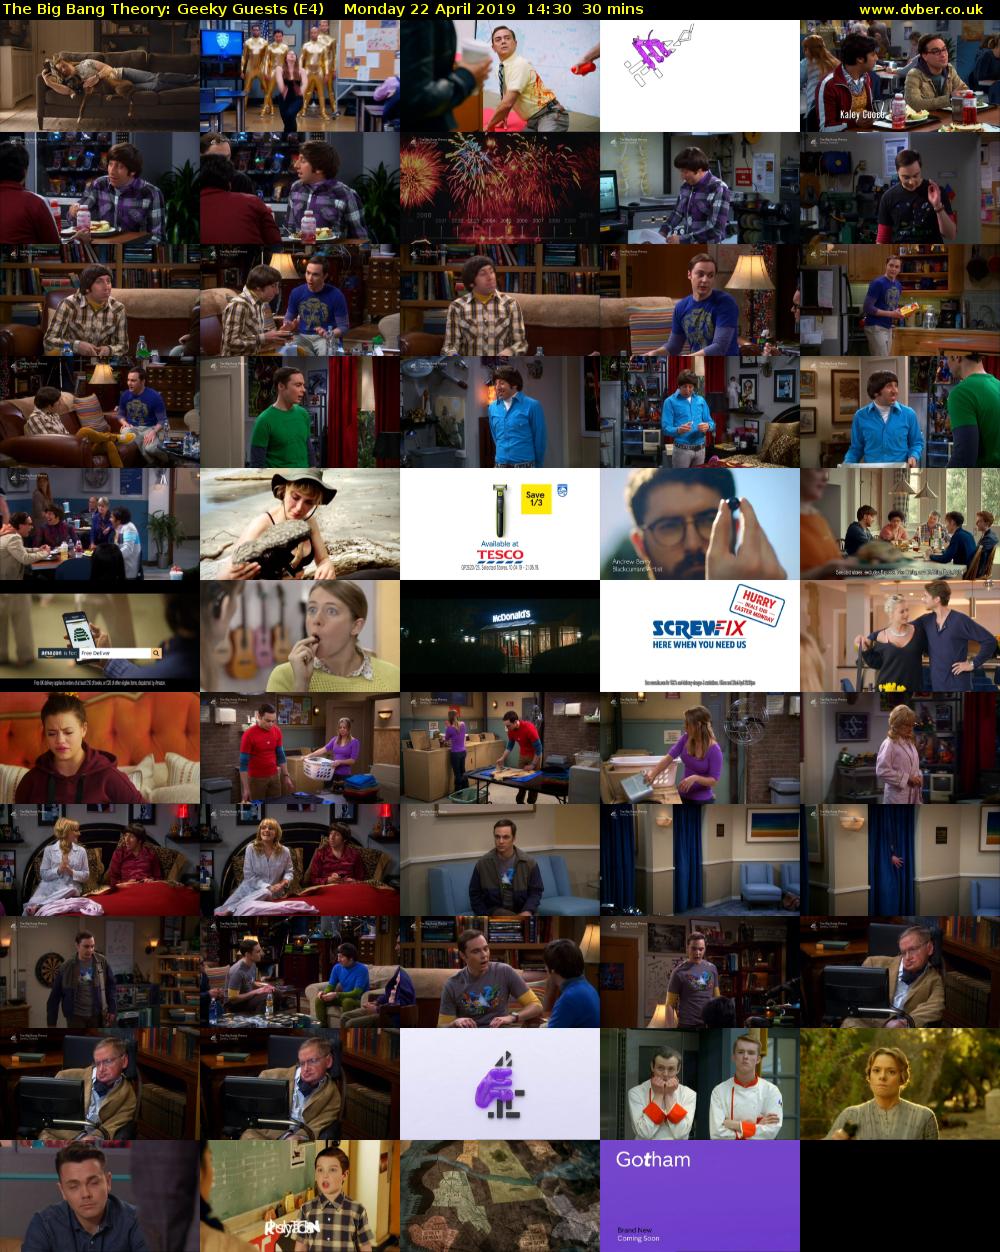 The Big Bang Theory: Geeky Guests (E4) Monday 22 April 2019 14:30 - 15:00